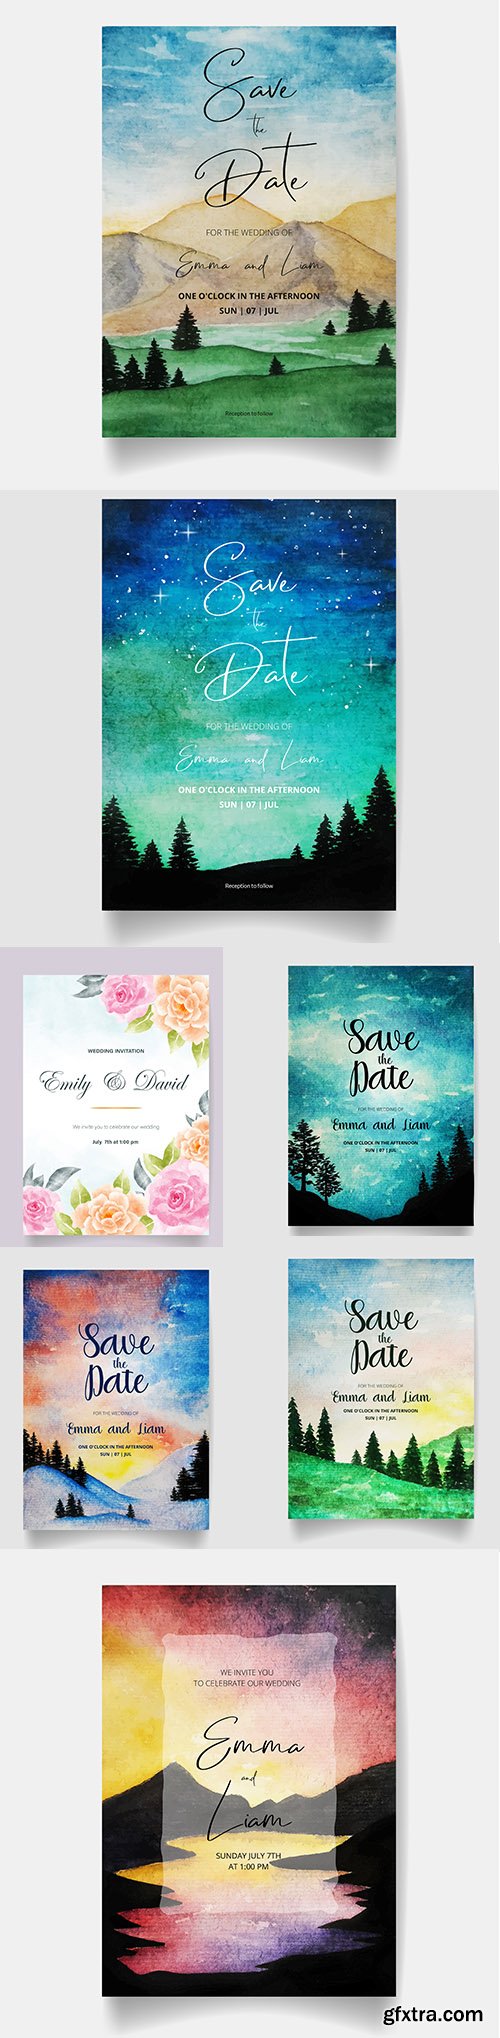 Save Date Wedding Invitation Watercolor Card